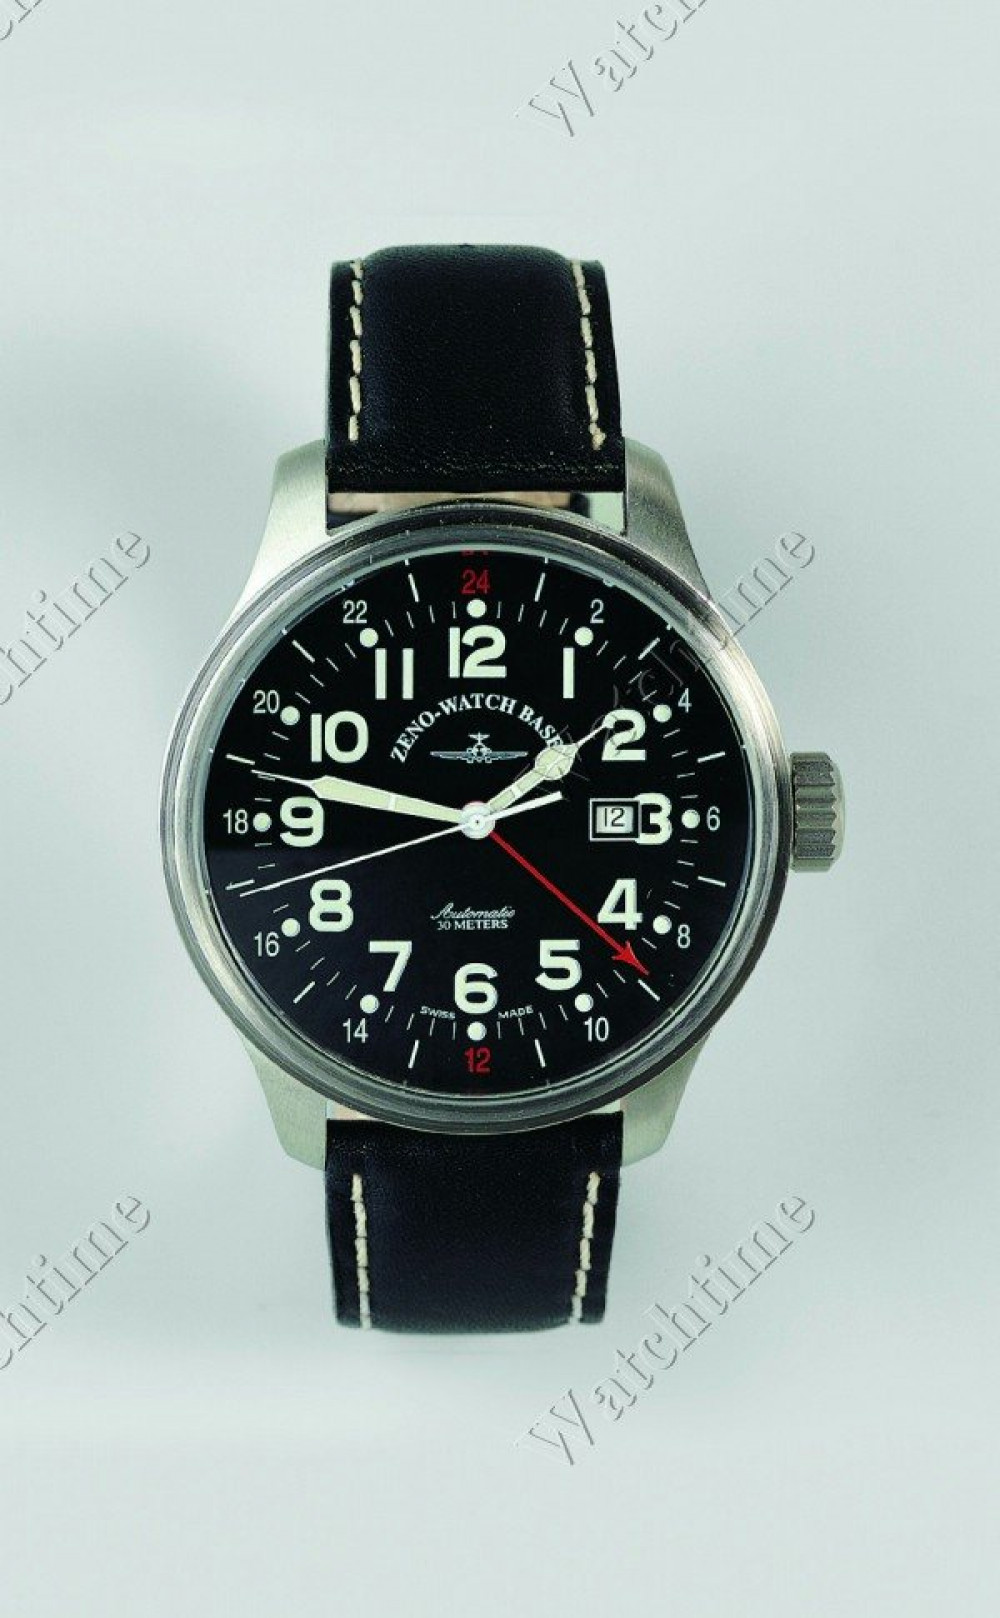 Zegarek firmy Zeno, model Pilot Oversized GMT